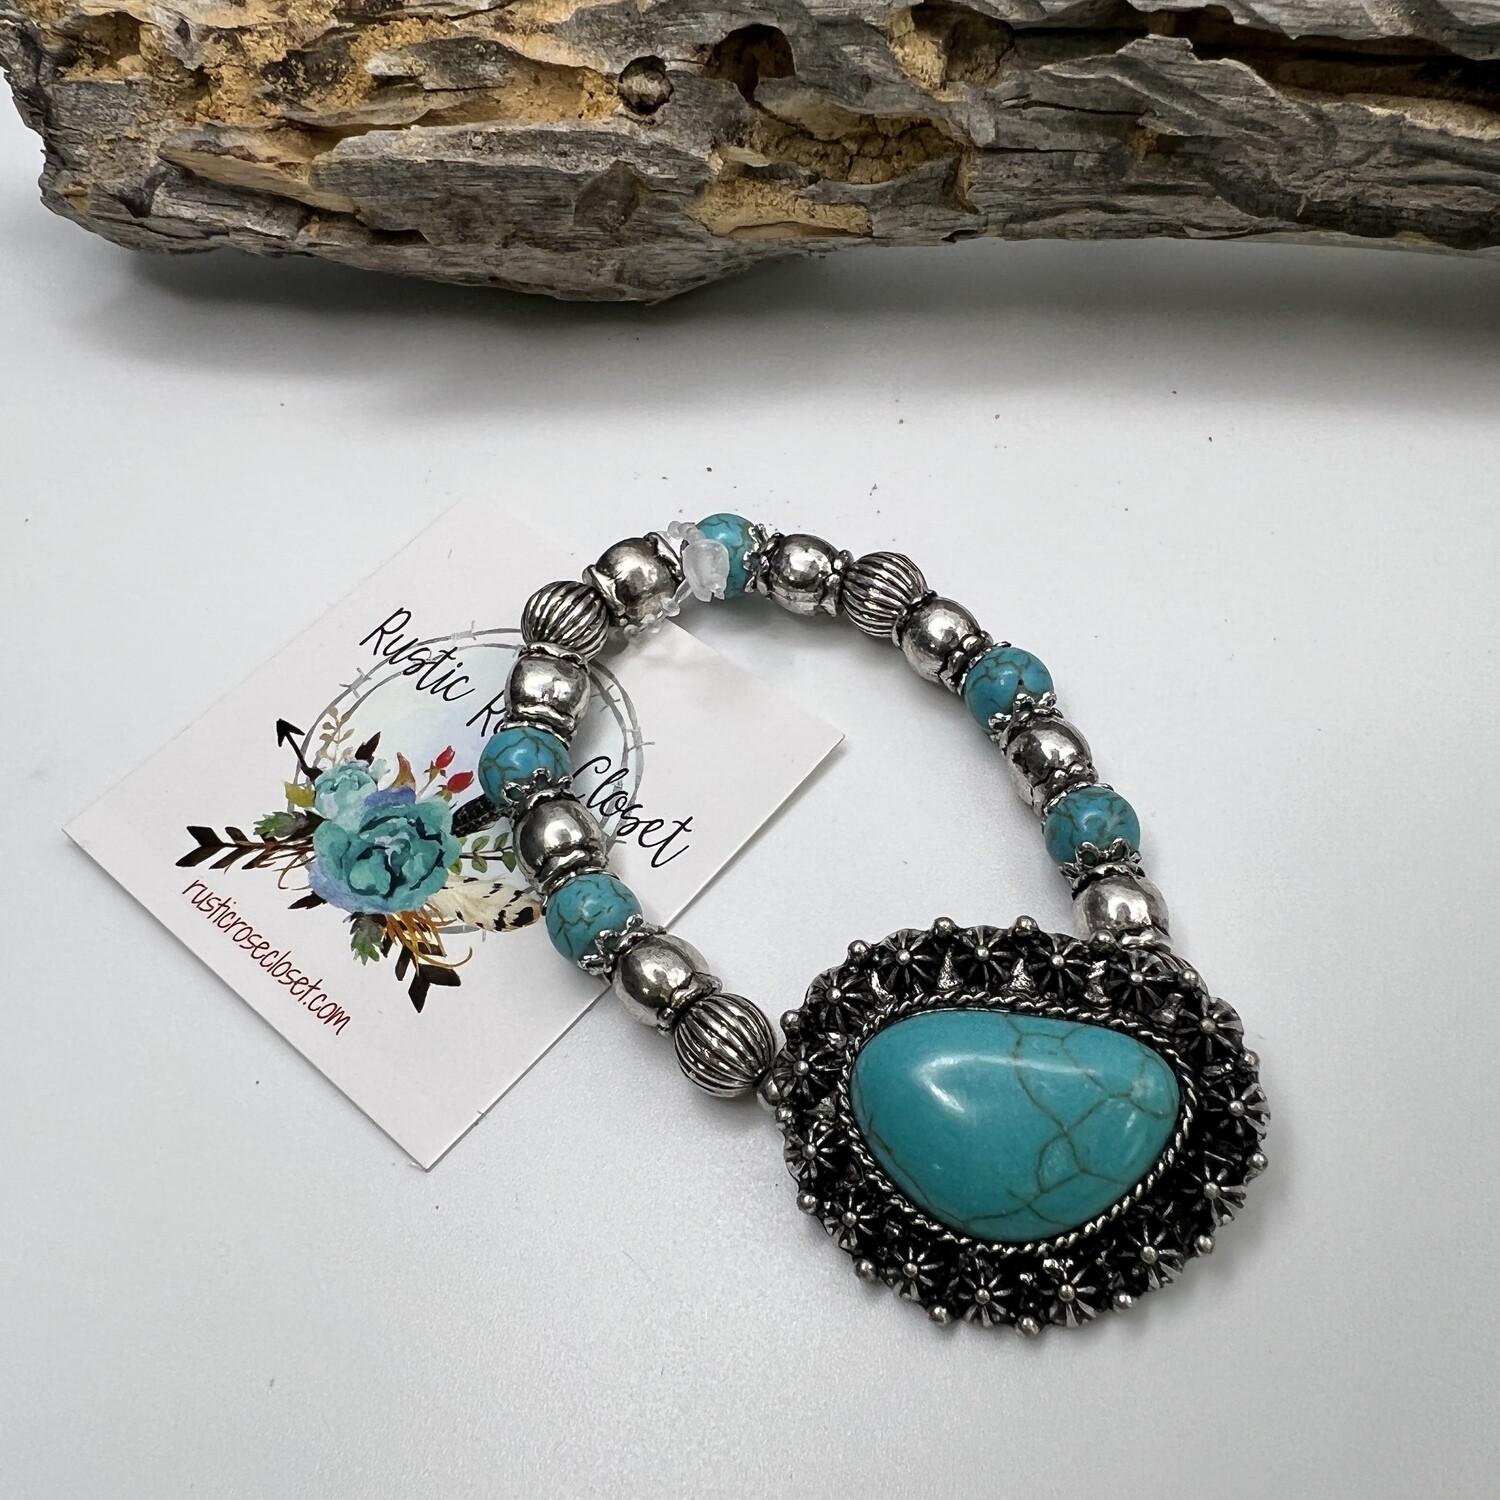 Turquoise Stone Bead Stretch Bracelet